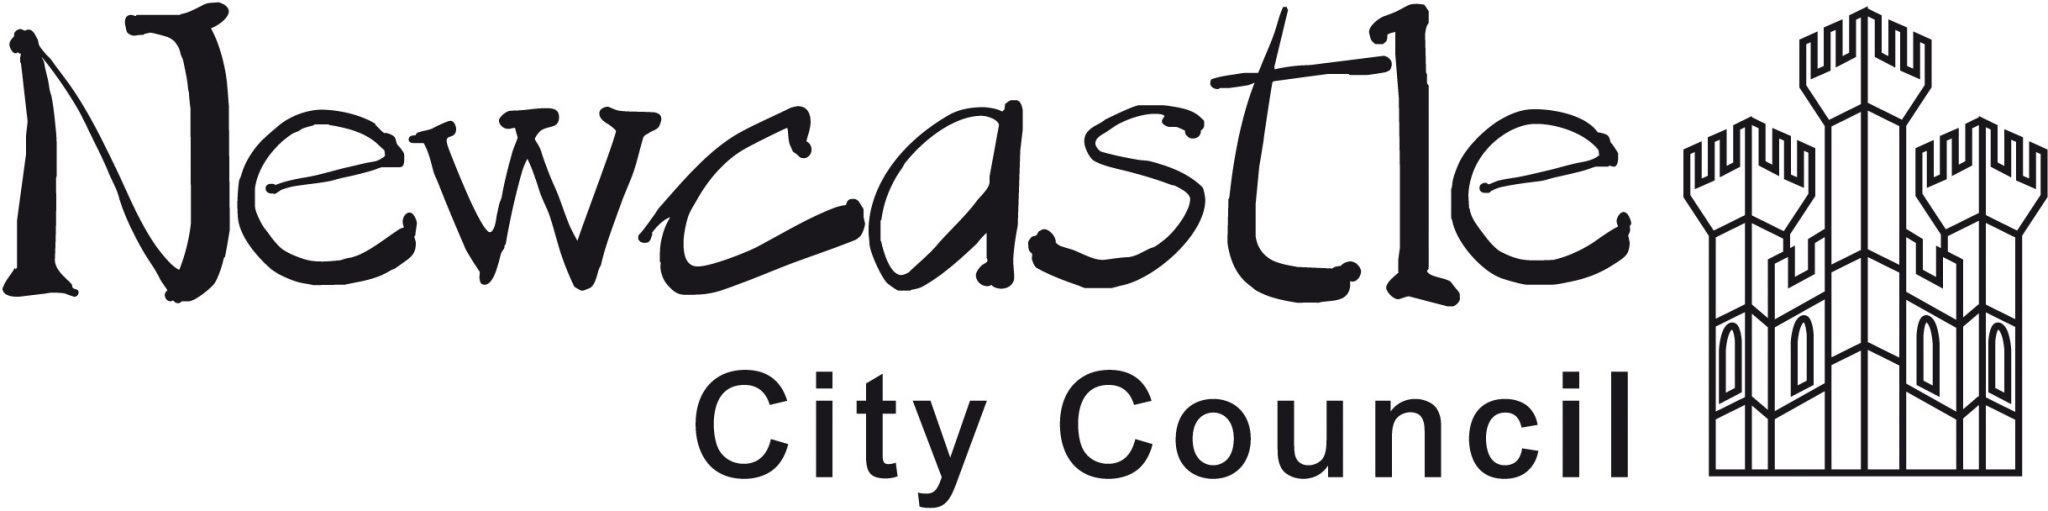 Newcastle City Council NewcastleGateshead Initiative